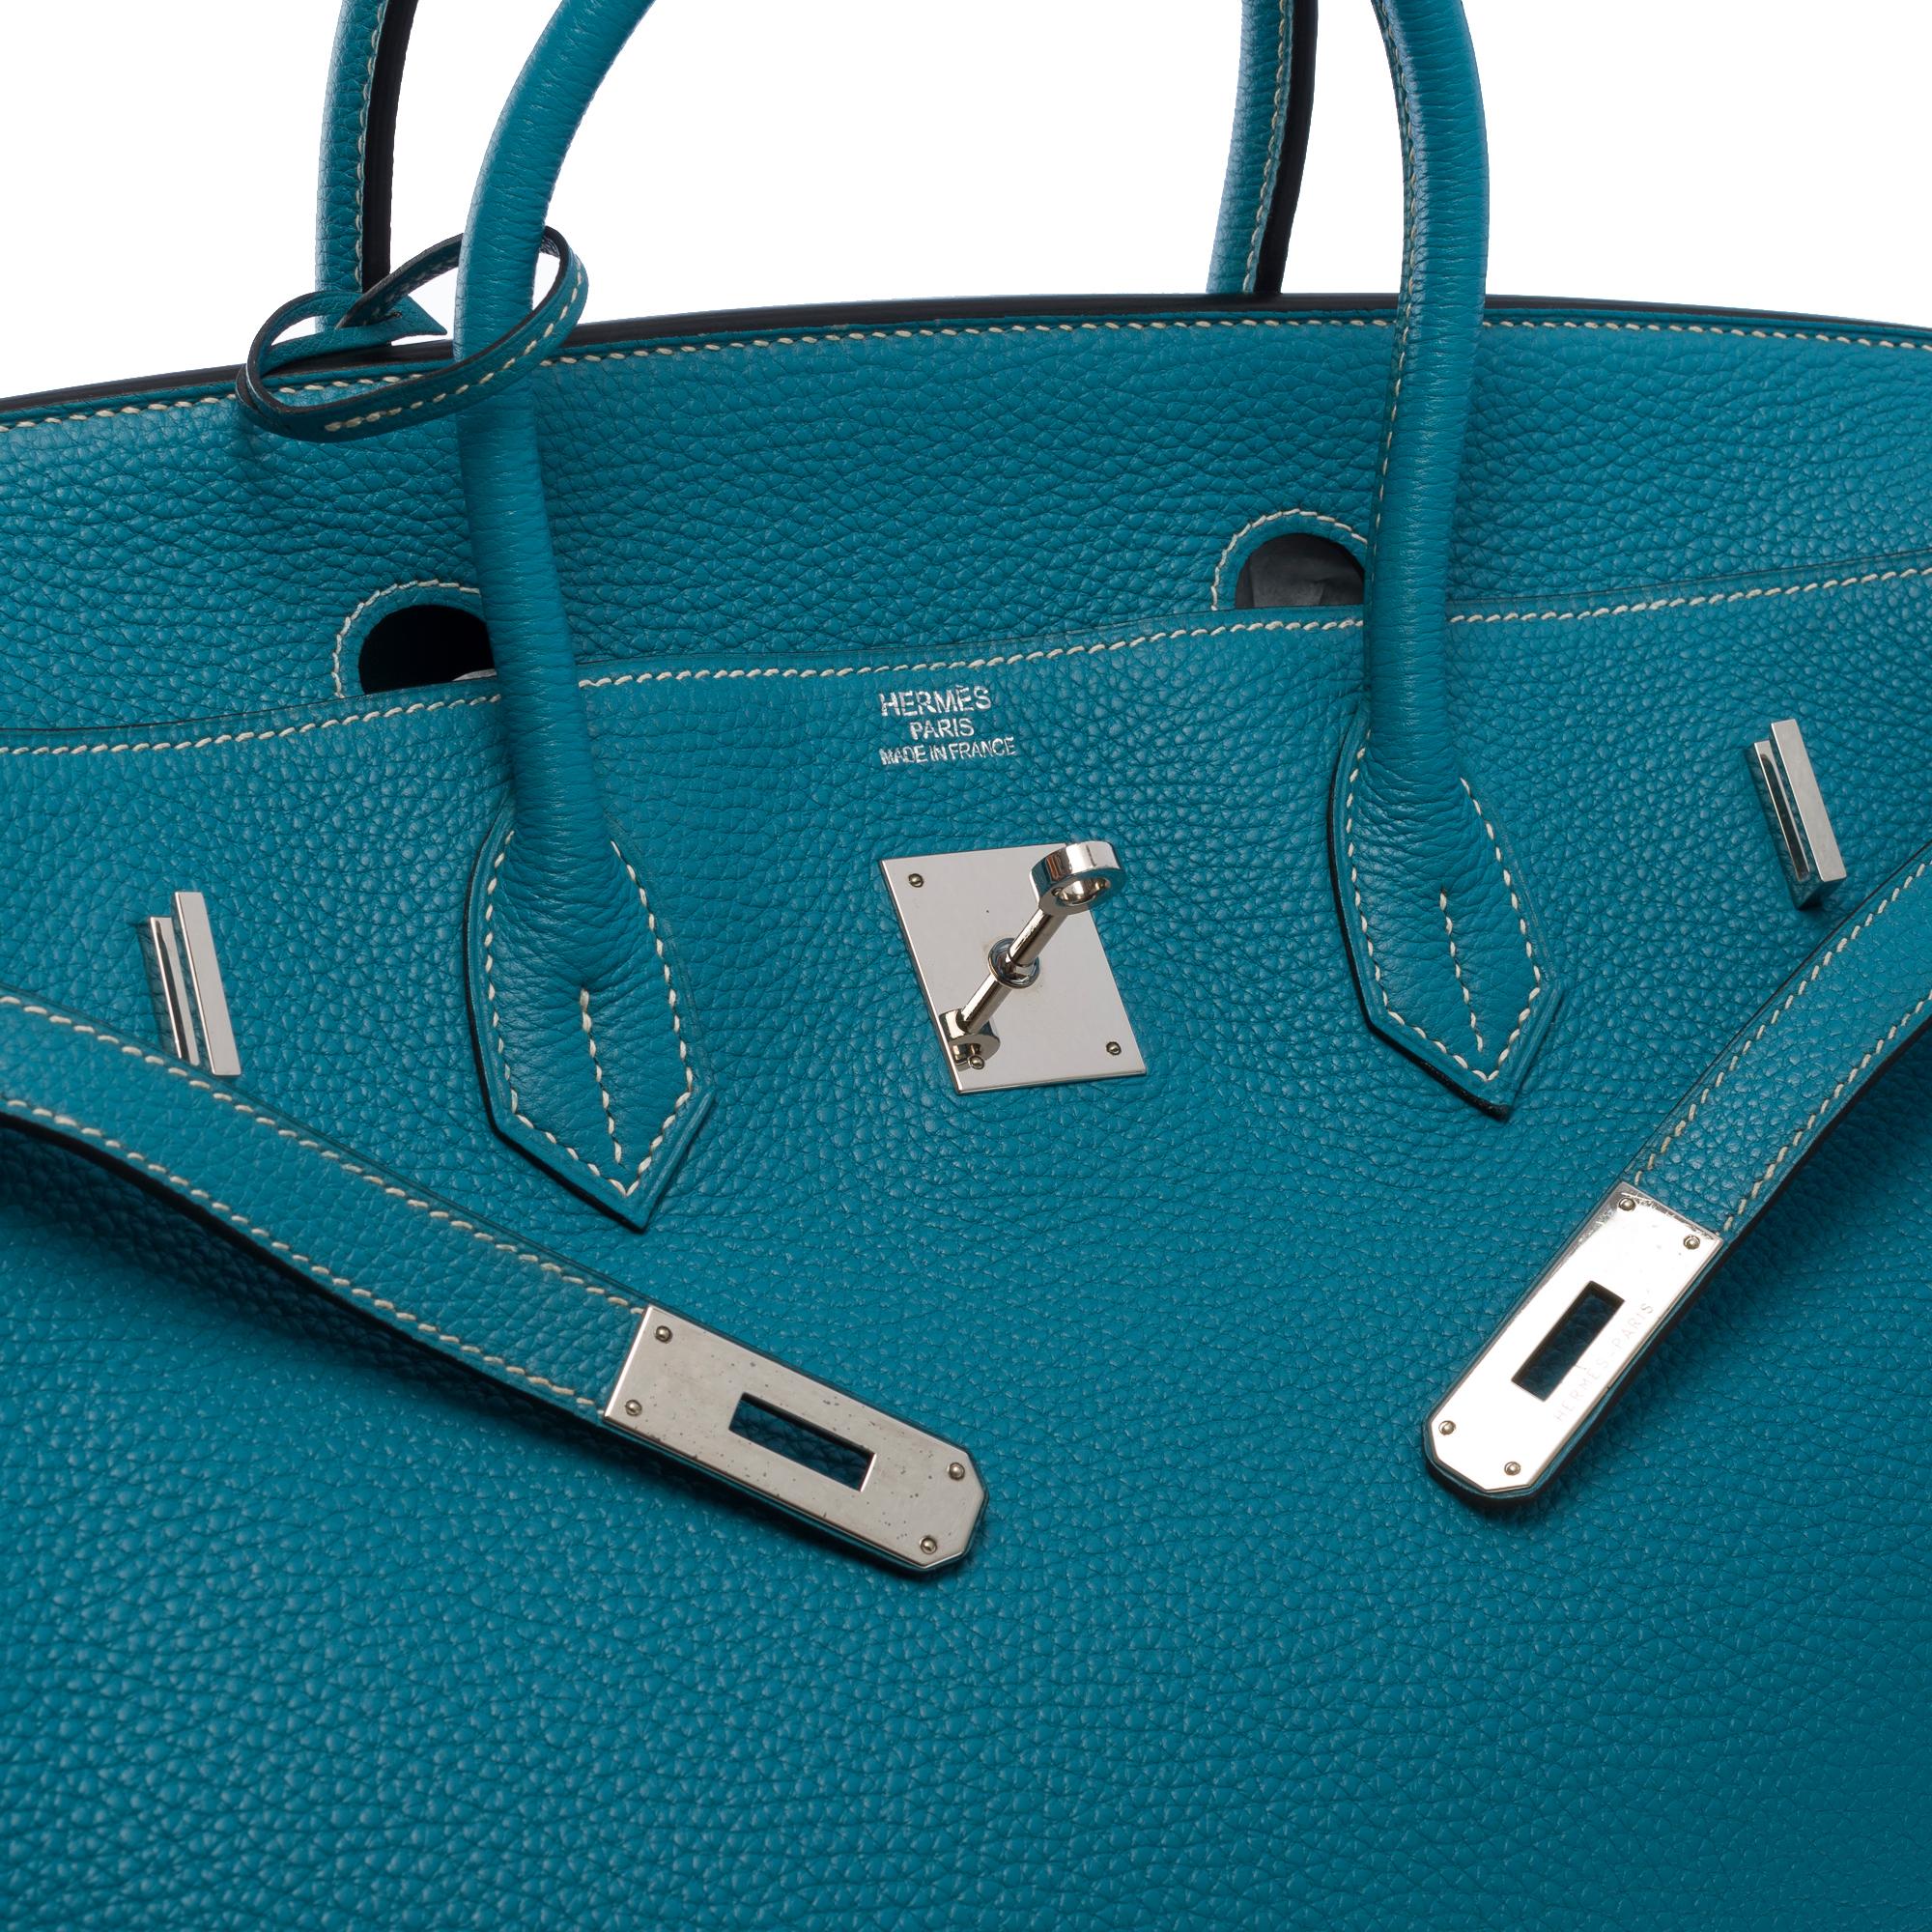 Stunning Hermes Birkin 40cm handbag in Blue Jean Togo leather, SHW 1